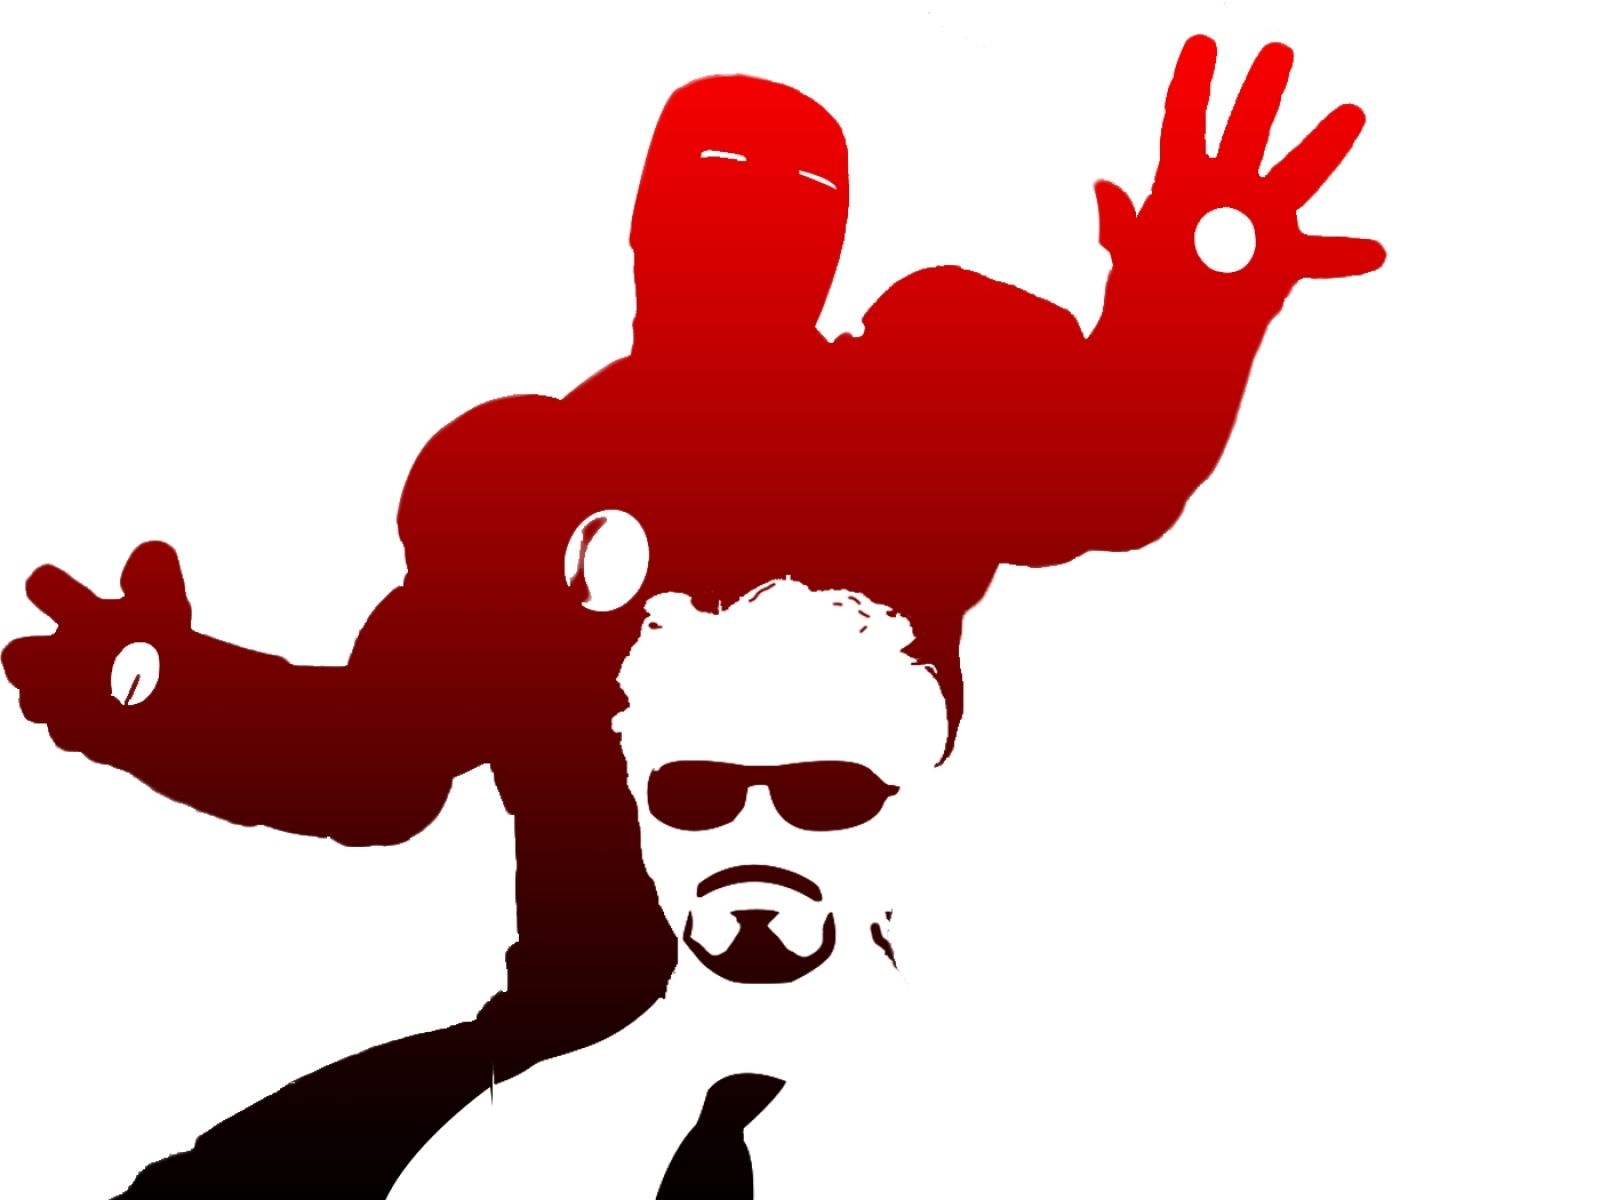 The Avengers Silhouette. iron man silhouette tony stark the avengers white background 1680x1050. Avengers, Iron man, Marvel iron man